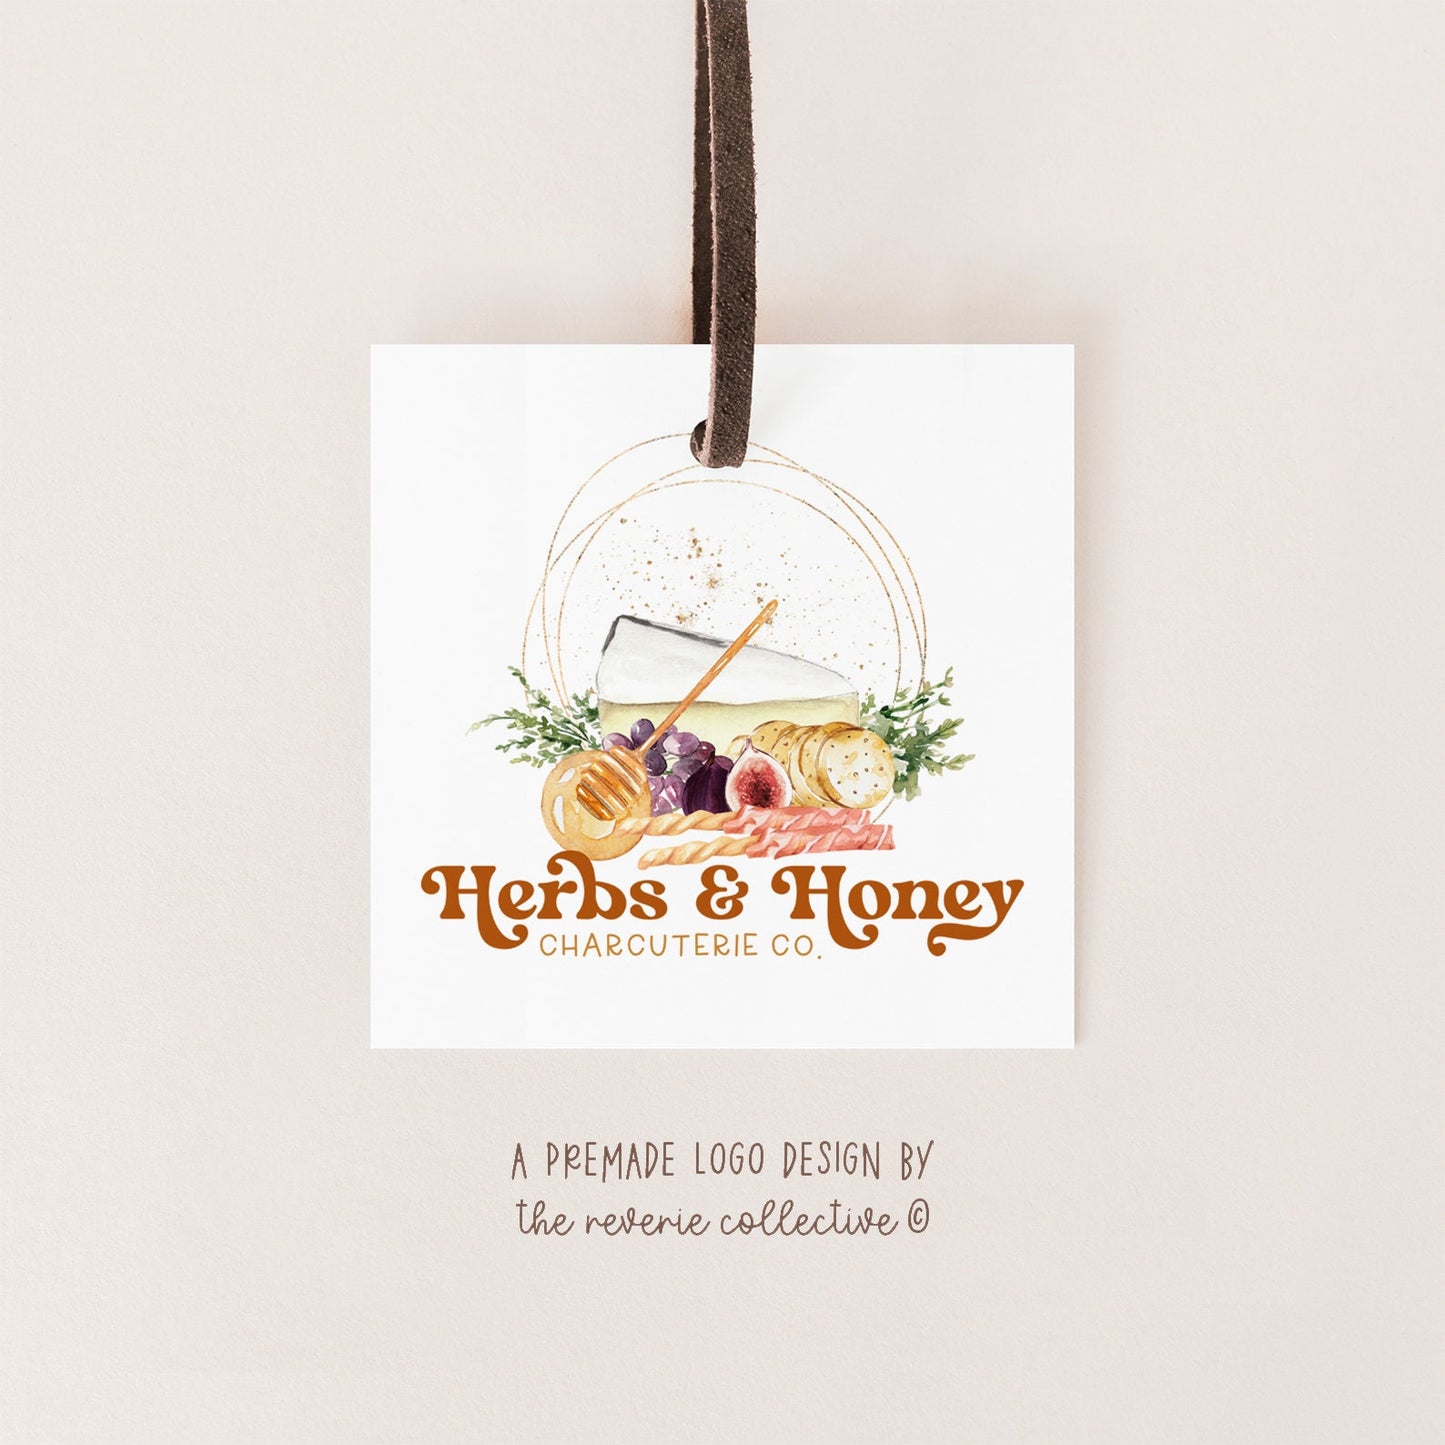 Herbs & Honey | Premade Logo Design | Charcuterie, Brie Cheese, Fig